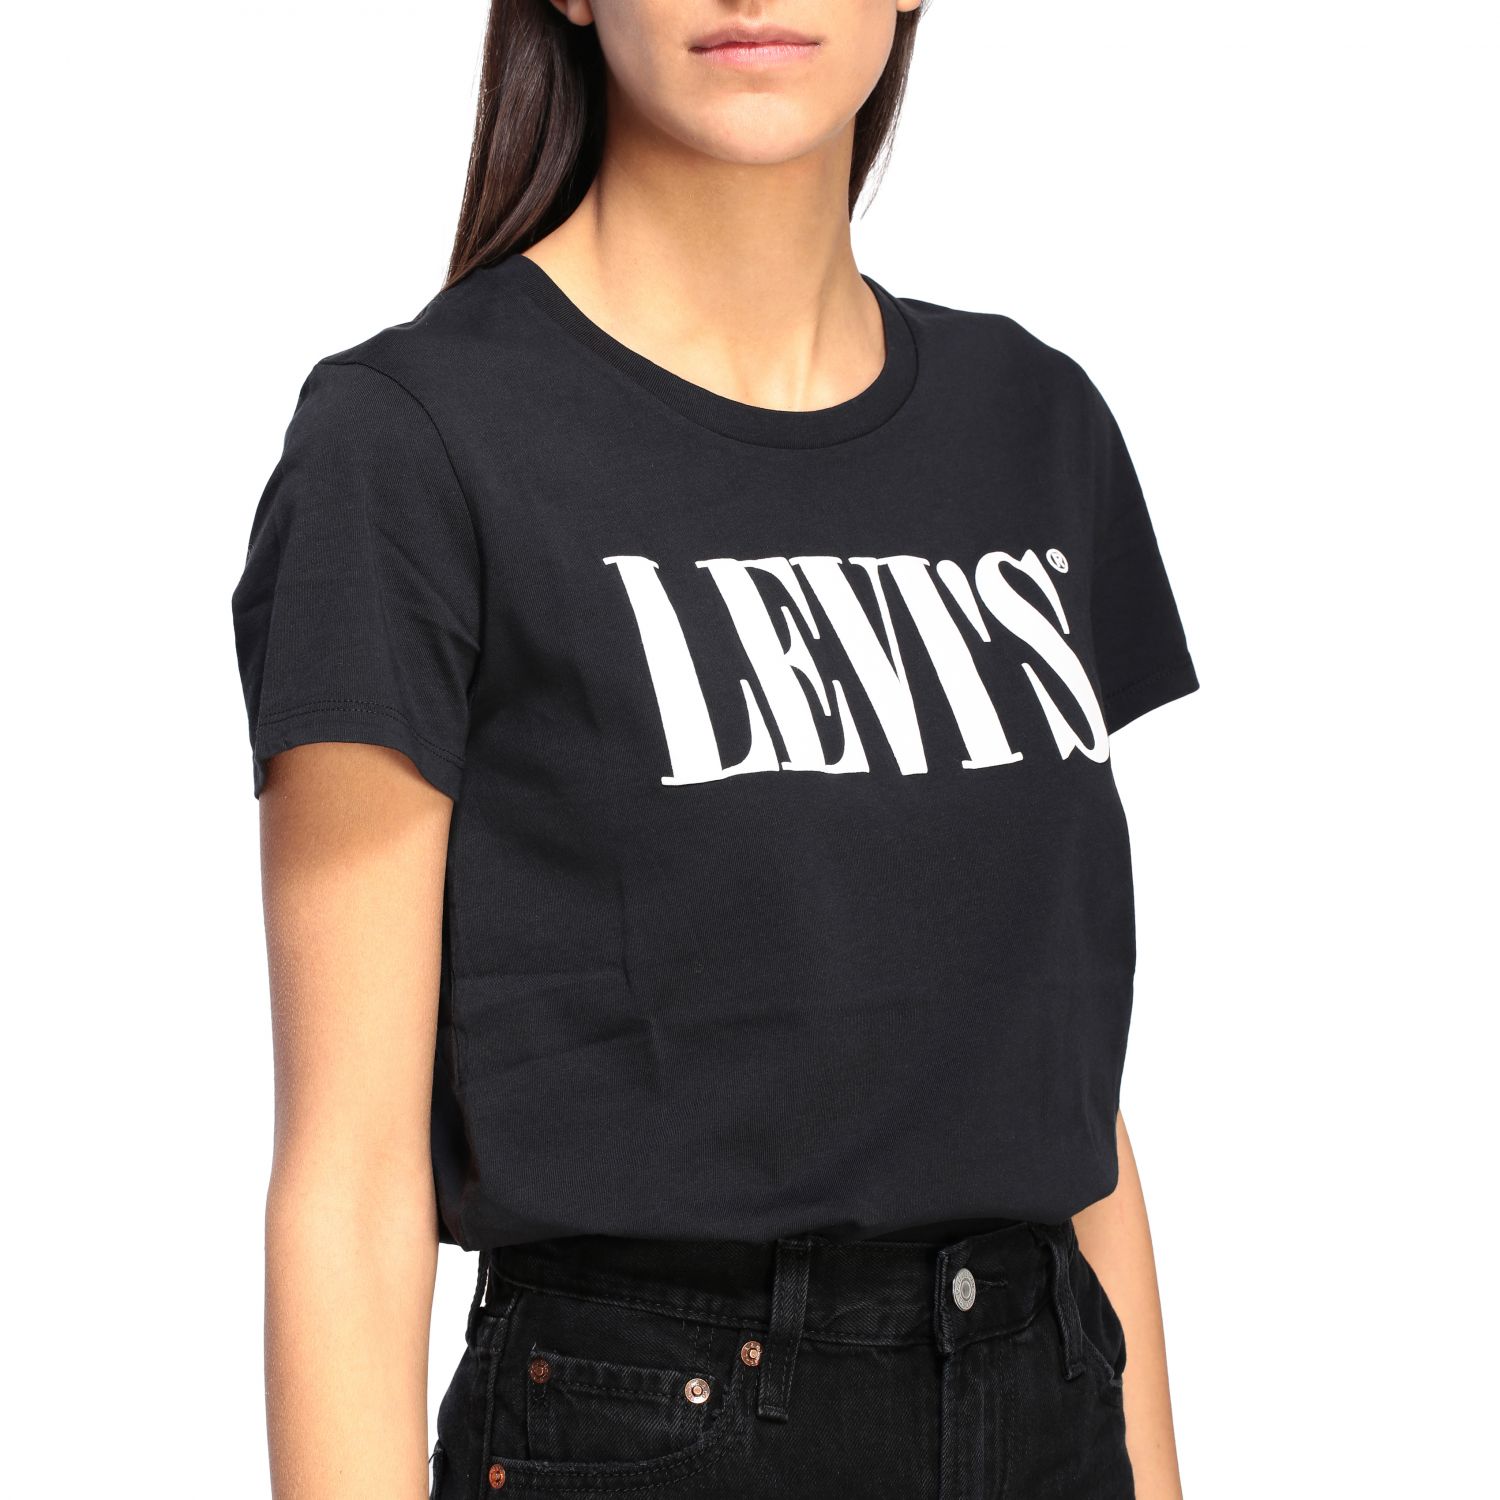 levis black shirt womens